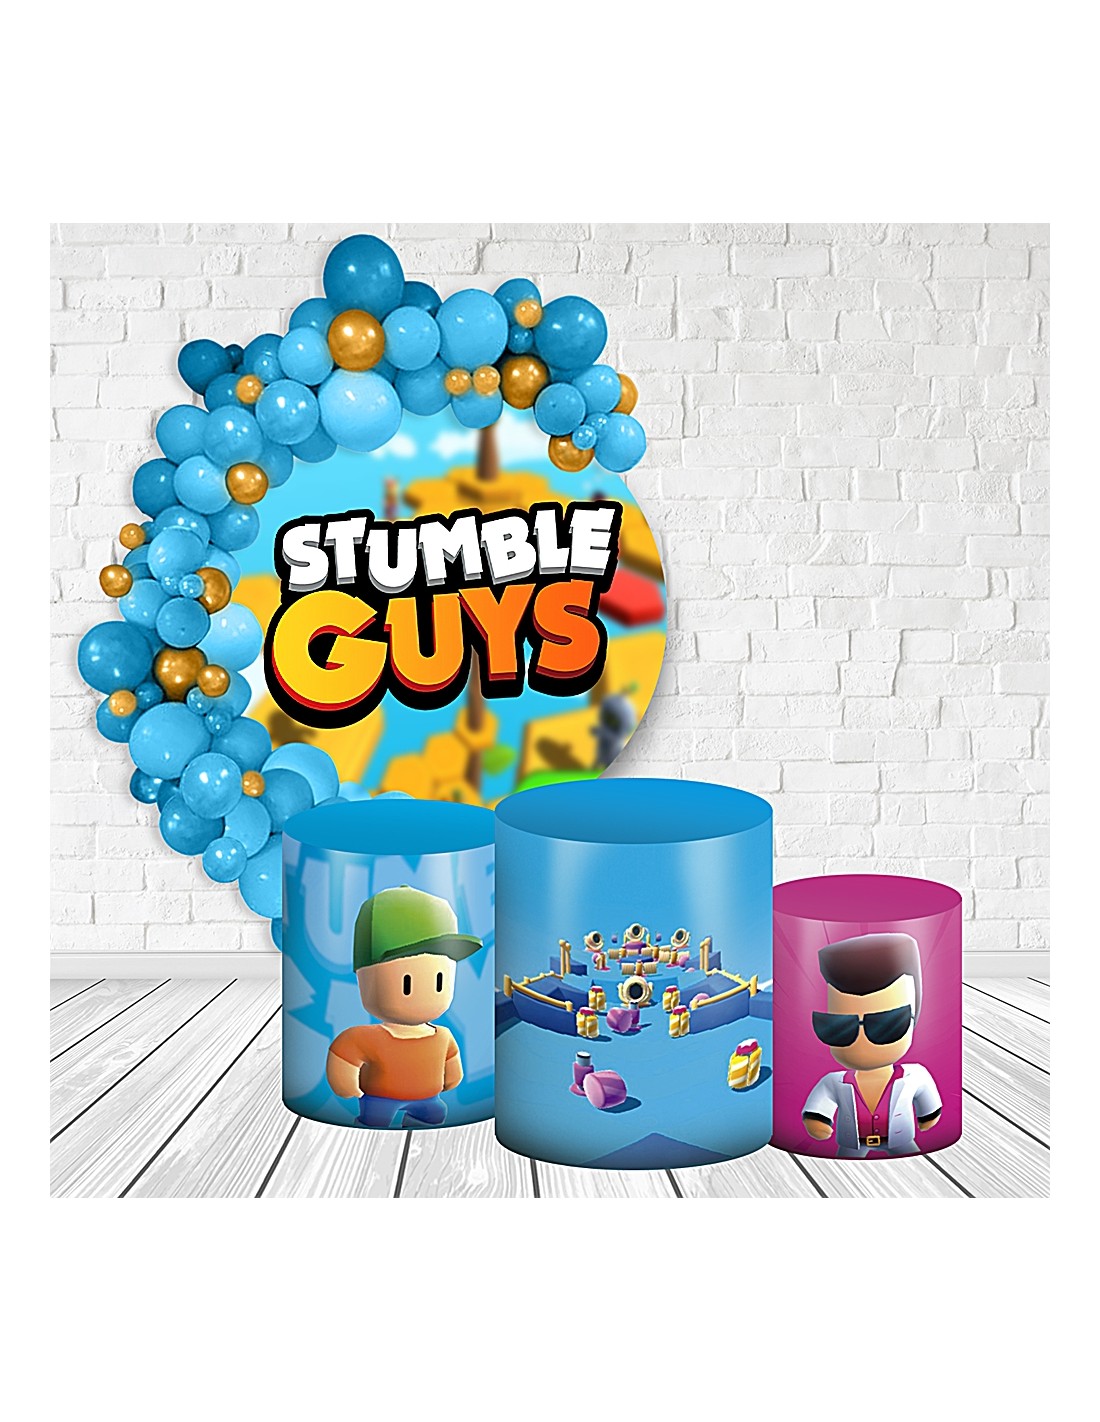 Kits Stumble Guys (Várias_Opções), jogar stumble guys na tv 